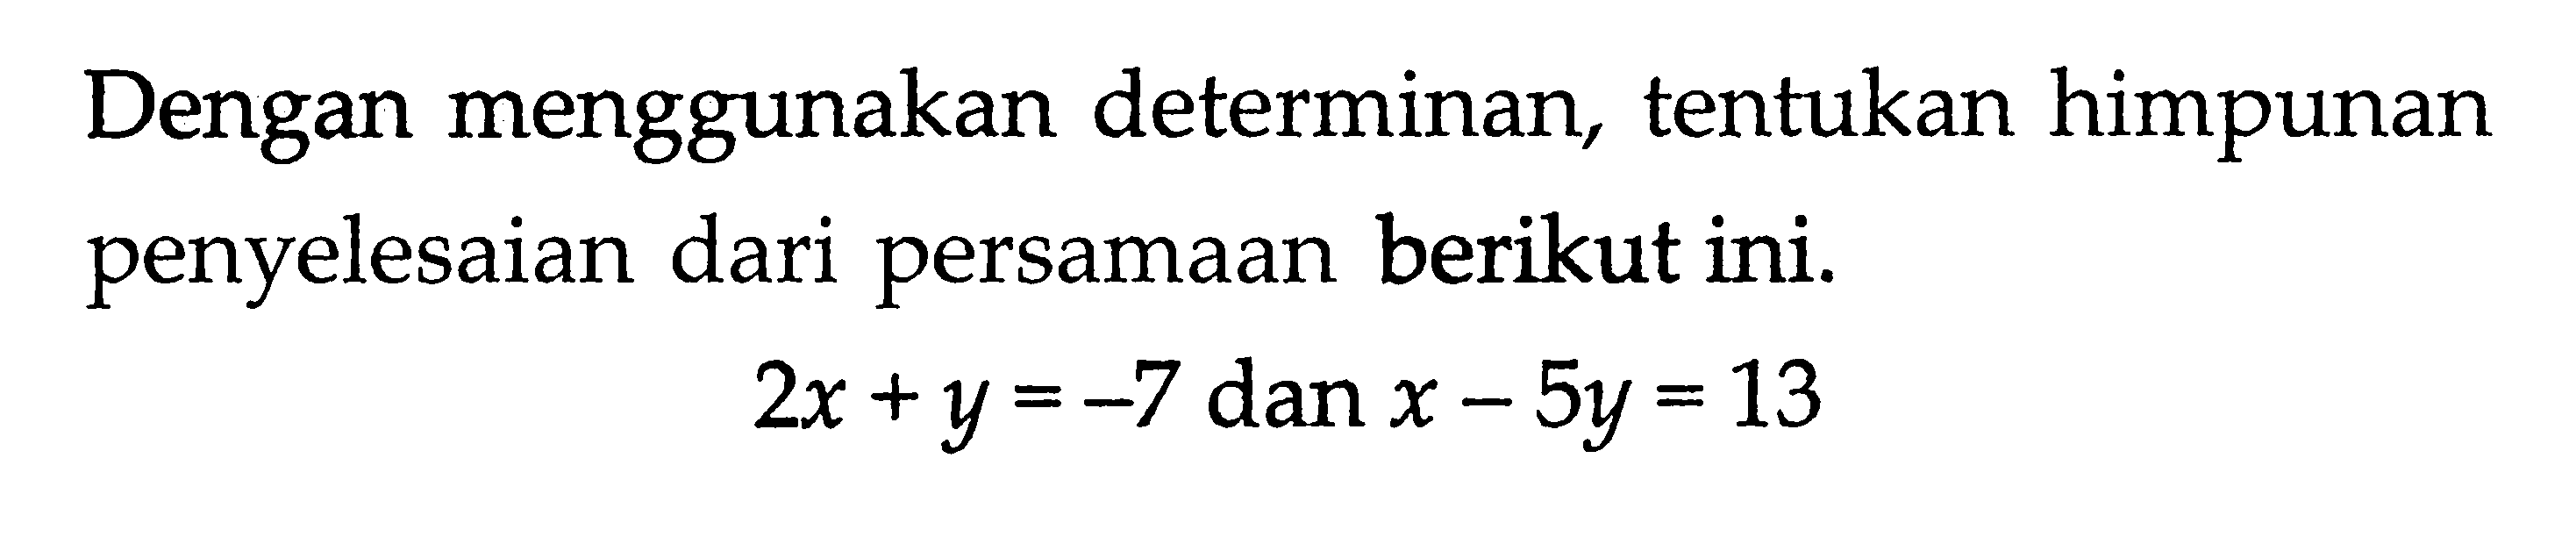 Dengan menggunakan determinan, tentukan himpunan penyelesaian dari persamaan berikut ini. 2x + y = -7 dan x - 5y = 13